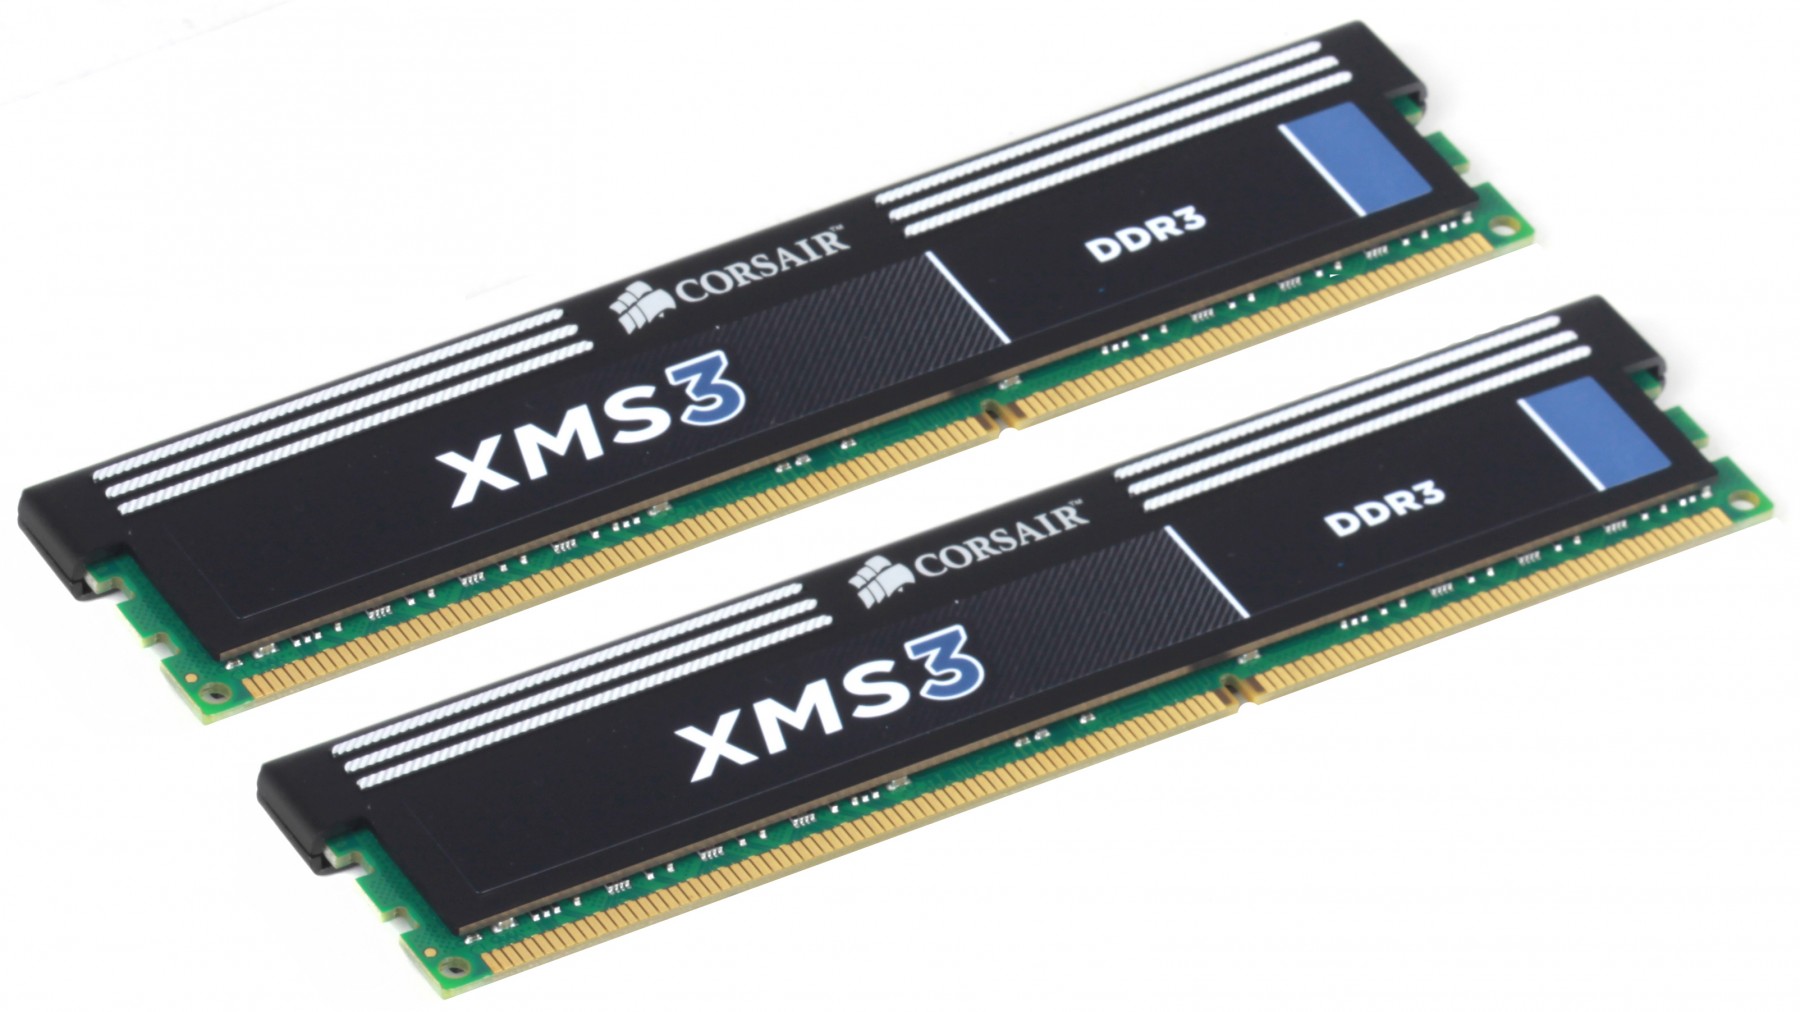 50003176828-Corsair XMS3 CMX4GX3M2A1600C9 4GB (2GBx2) Kit PC3-12800 DDR3-1600 Desktop Memory Ram-image